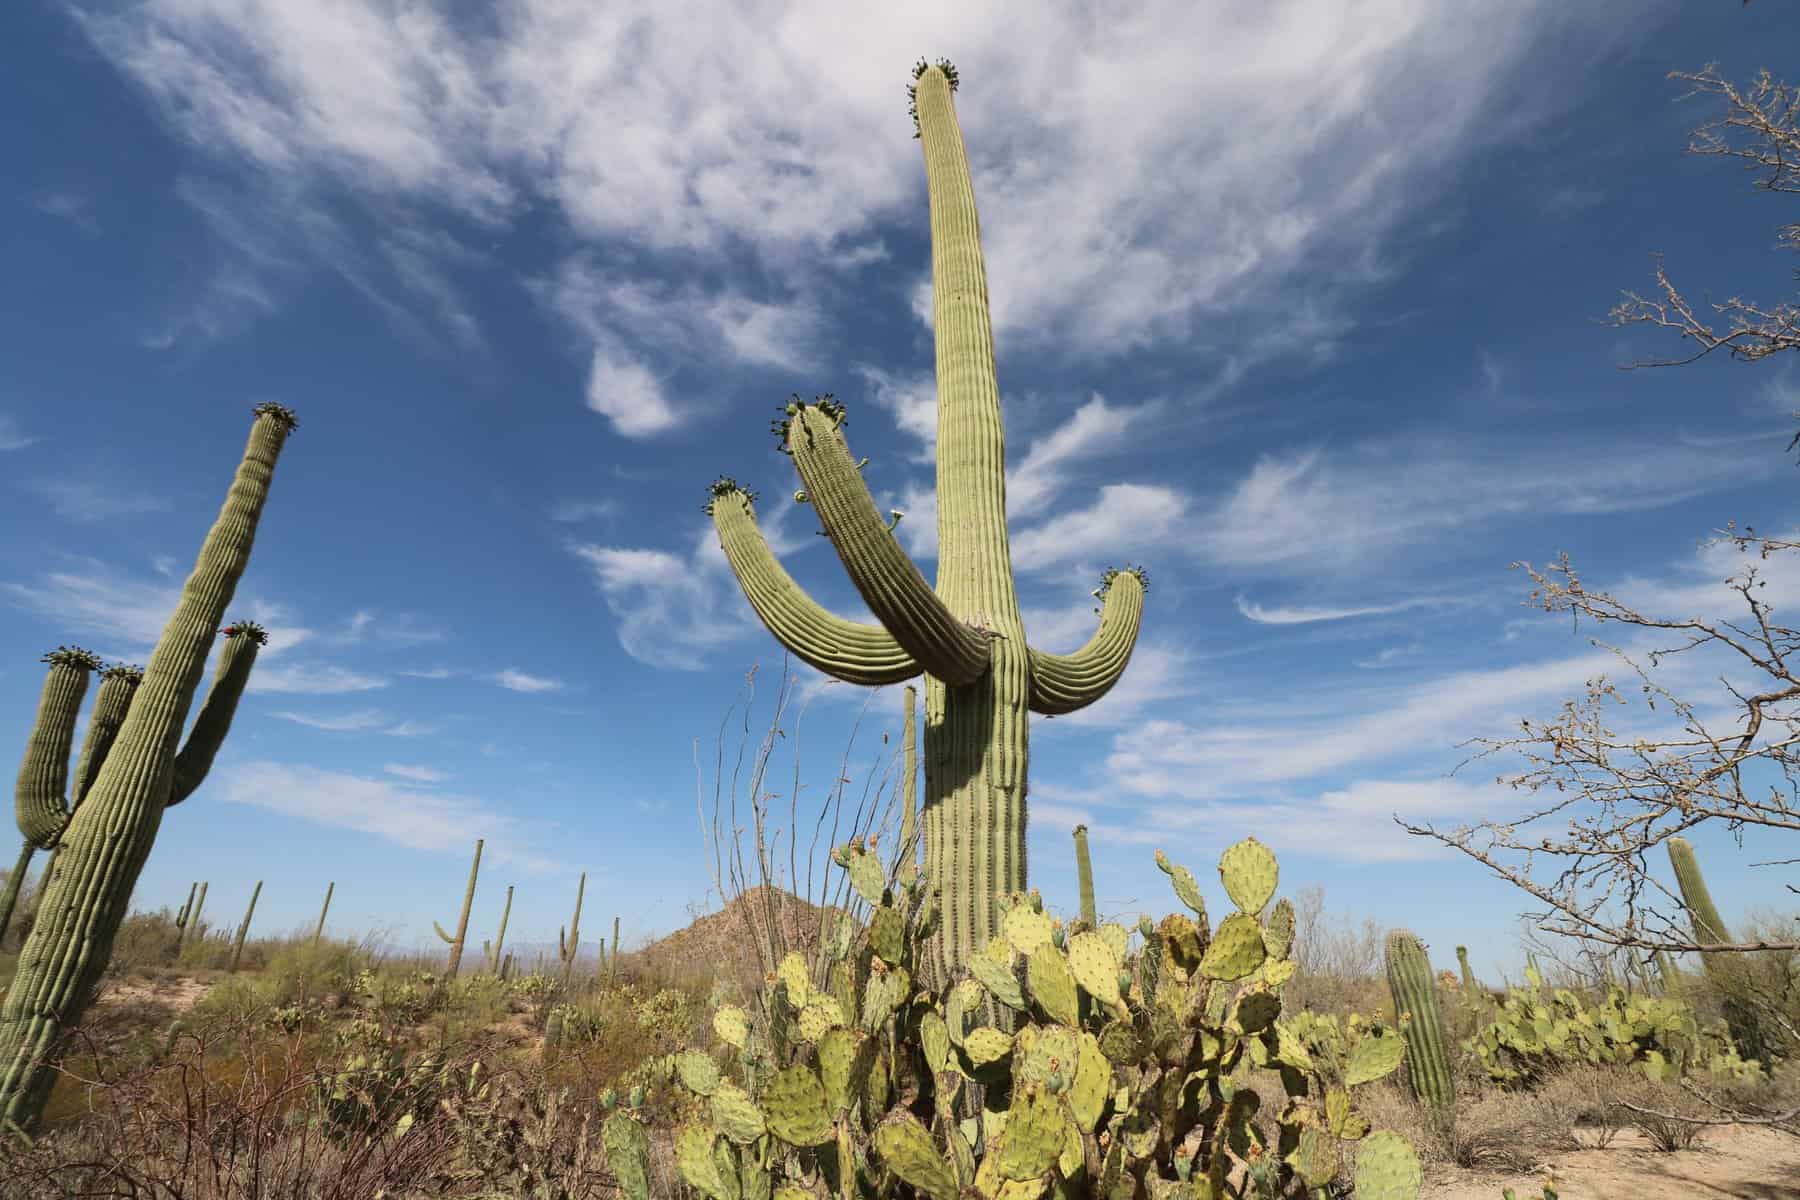 Several giant Saguaro cacti in the desert of Saguaro National Park in Tucson.